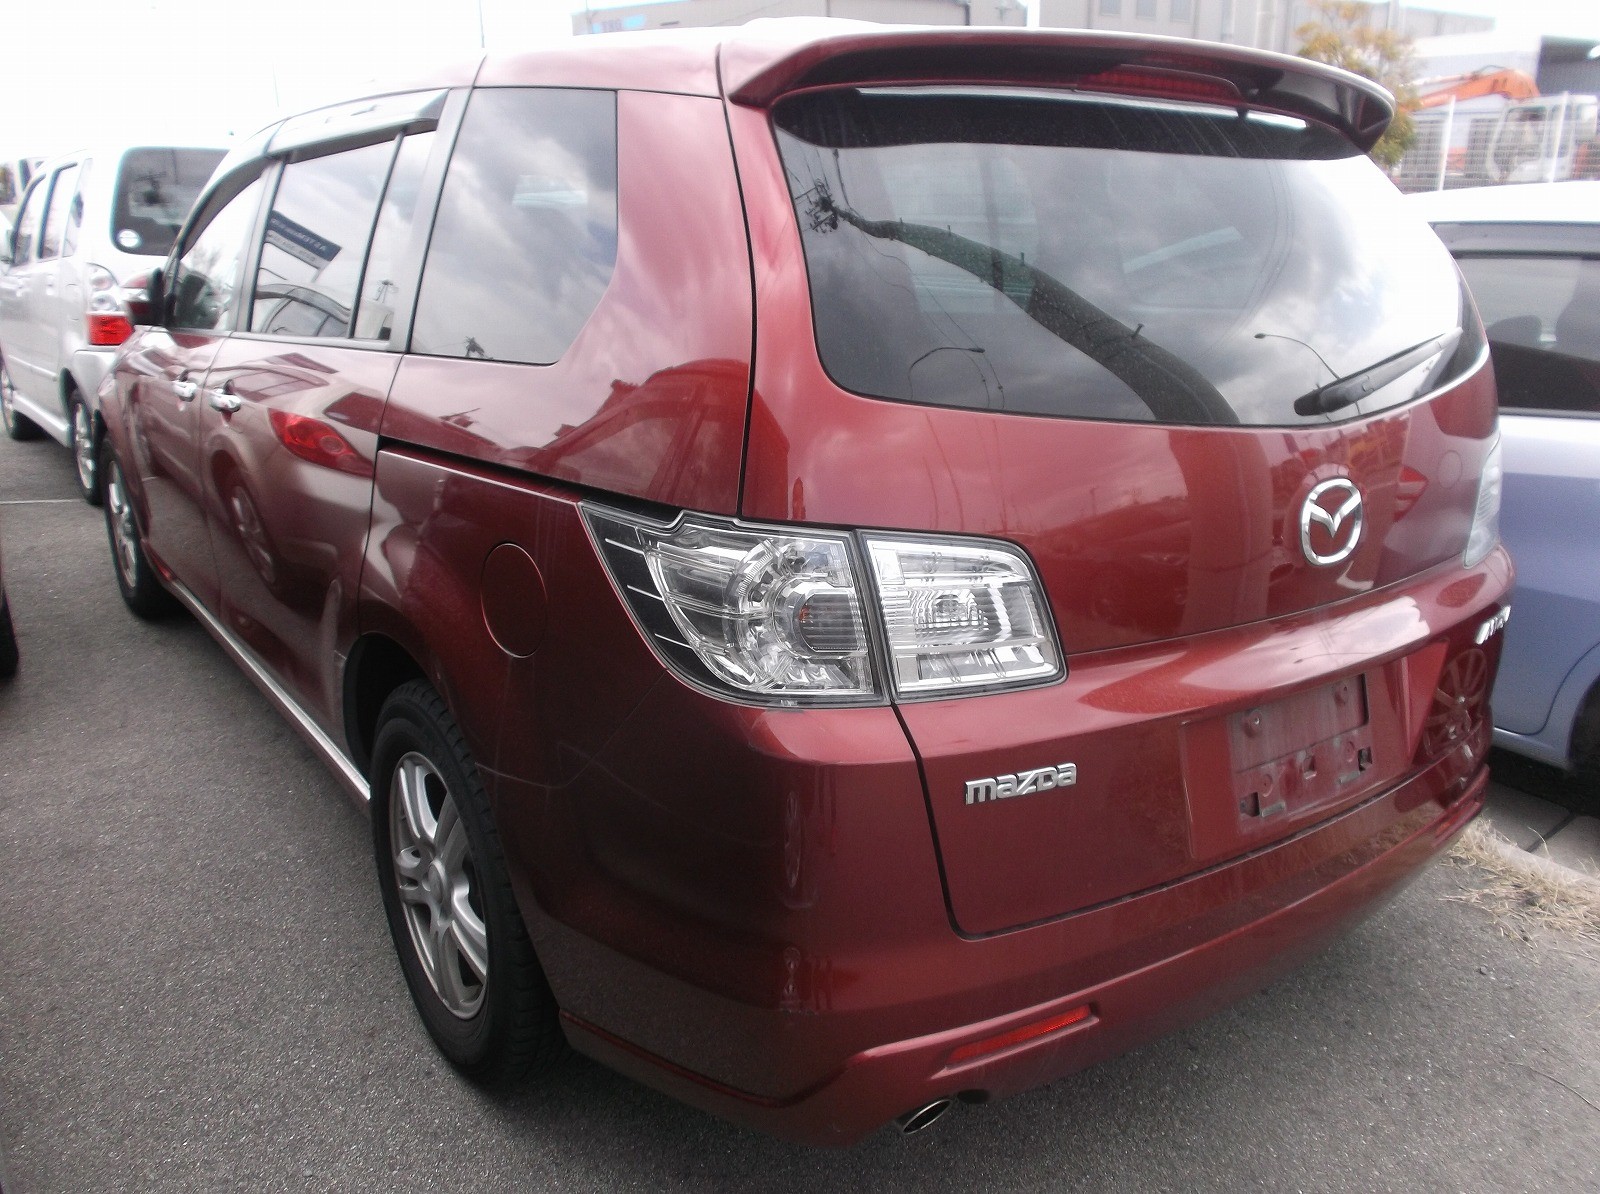 Мазда мпв владивосток. Мазда МПВ 3 литра красная. Mazda MPV 98 lvl. Mazda MPV Rear Wing. Mazda MPV Tuning Spoiler.